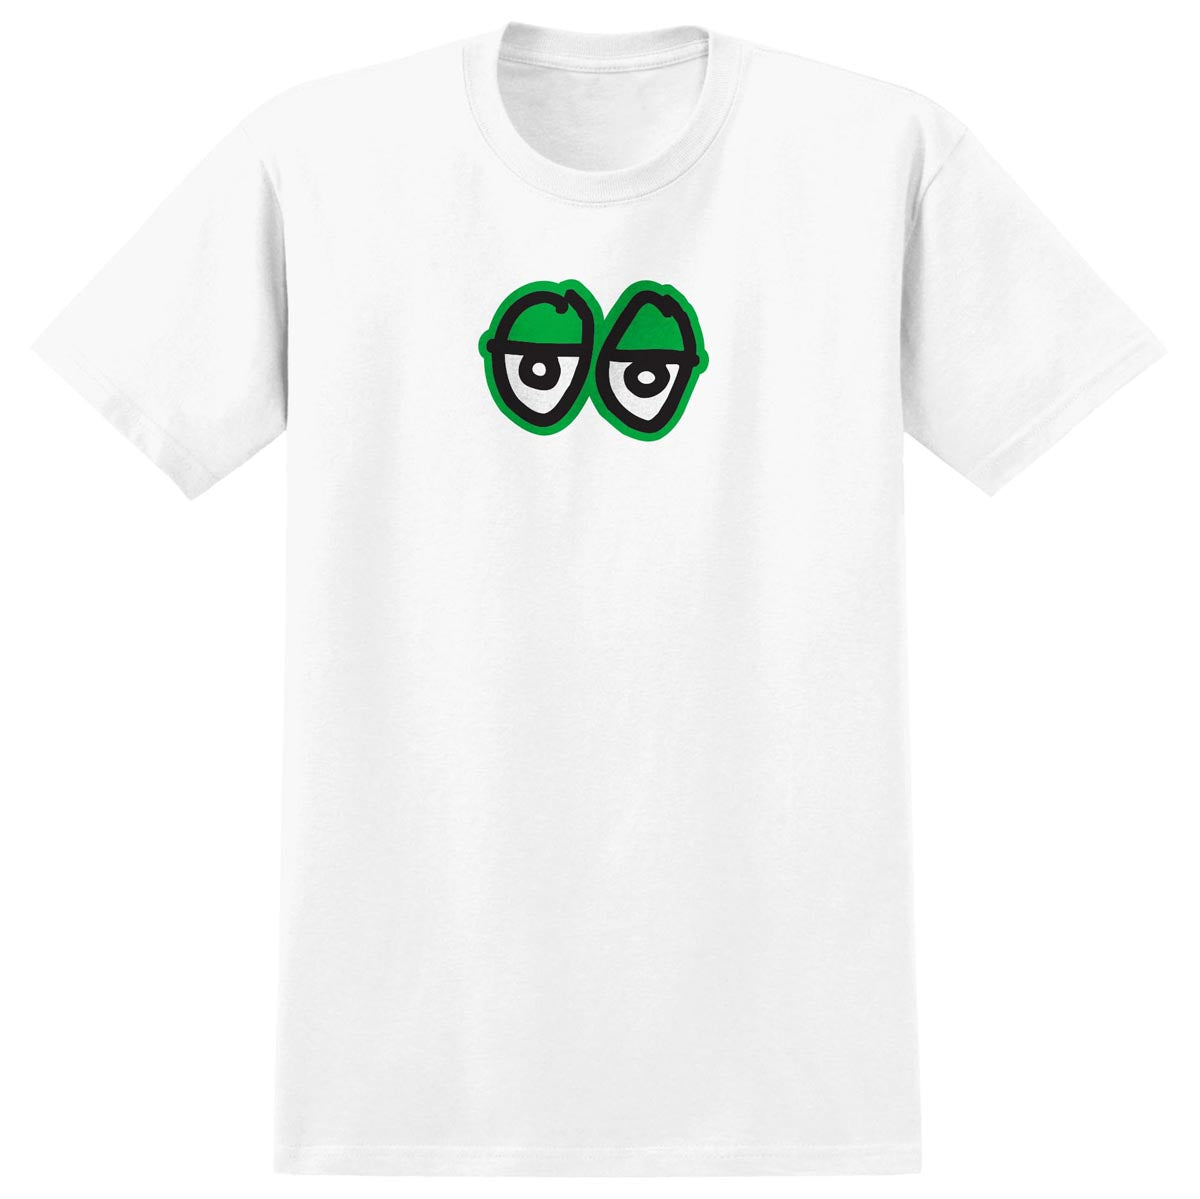 Krooked Eyes Lg T-Shirt - White/Green image 1